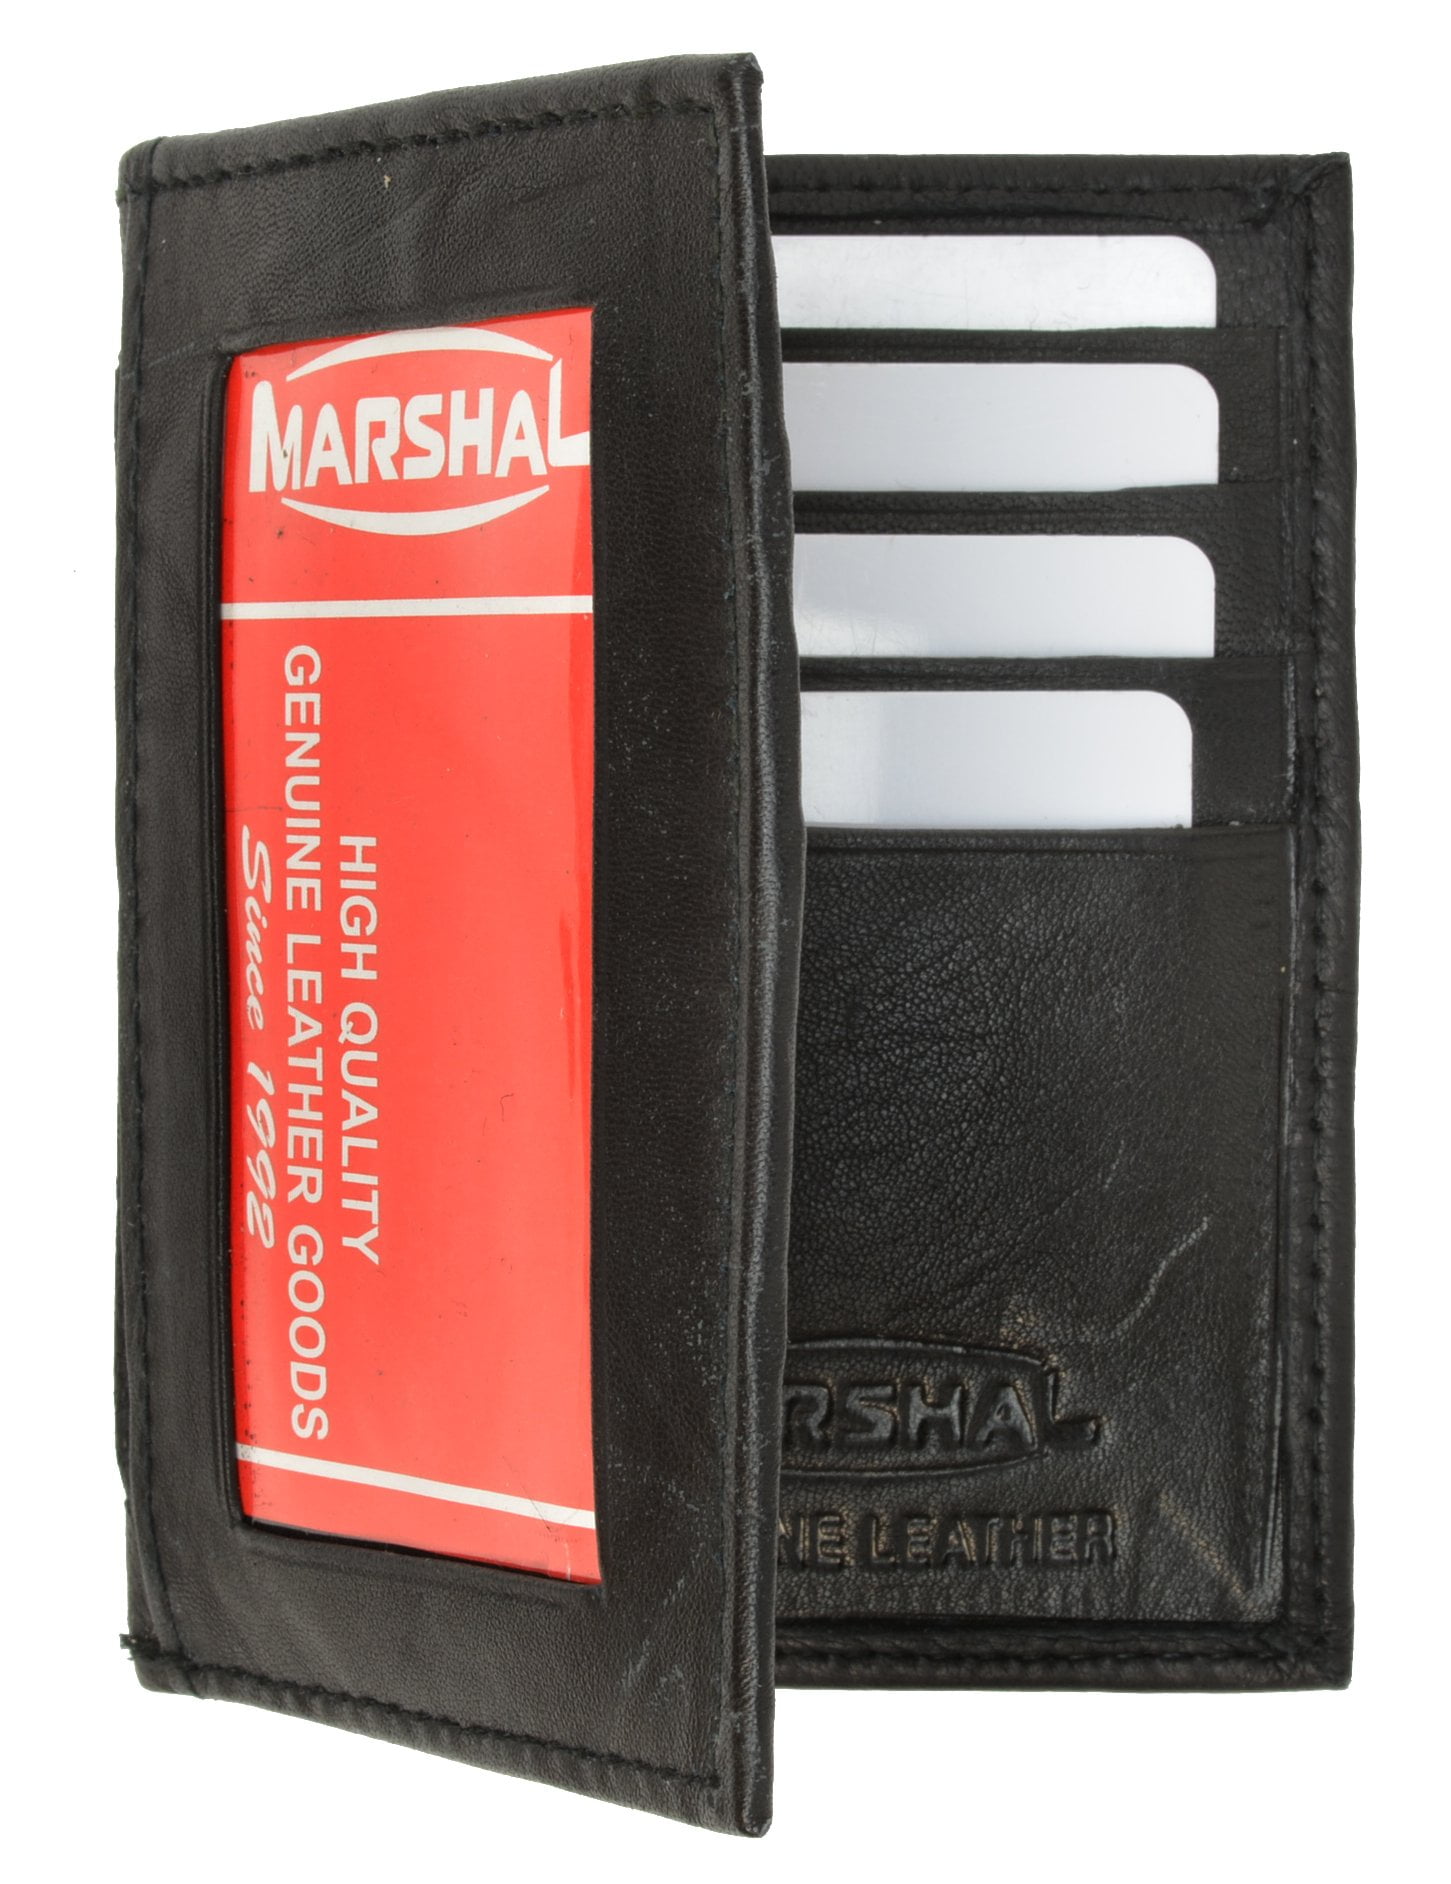 New Mens Slim Thin Bifold Leather ID Wallet Black Credit Card Window Holder Case